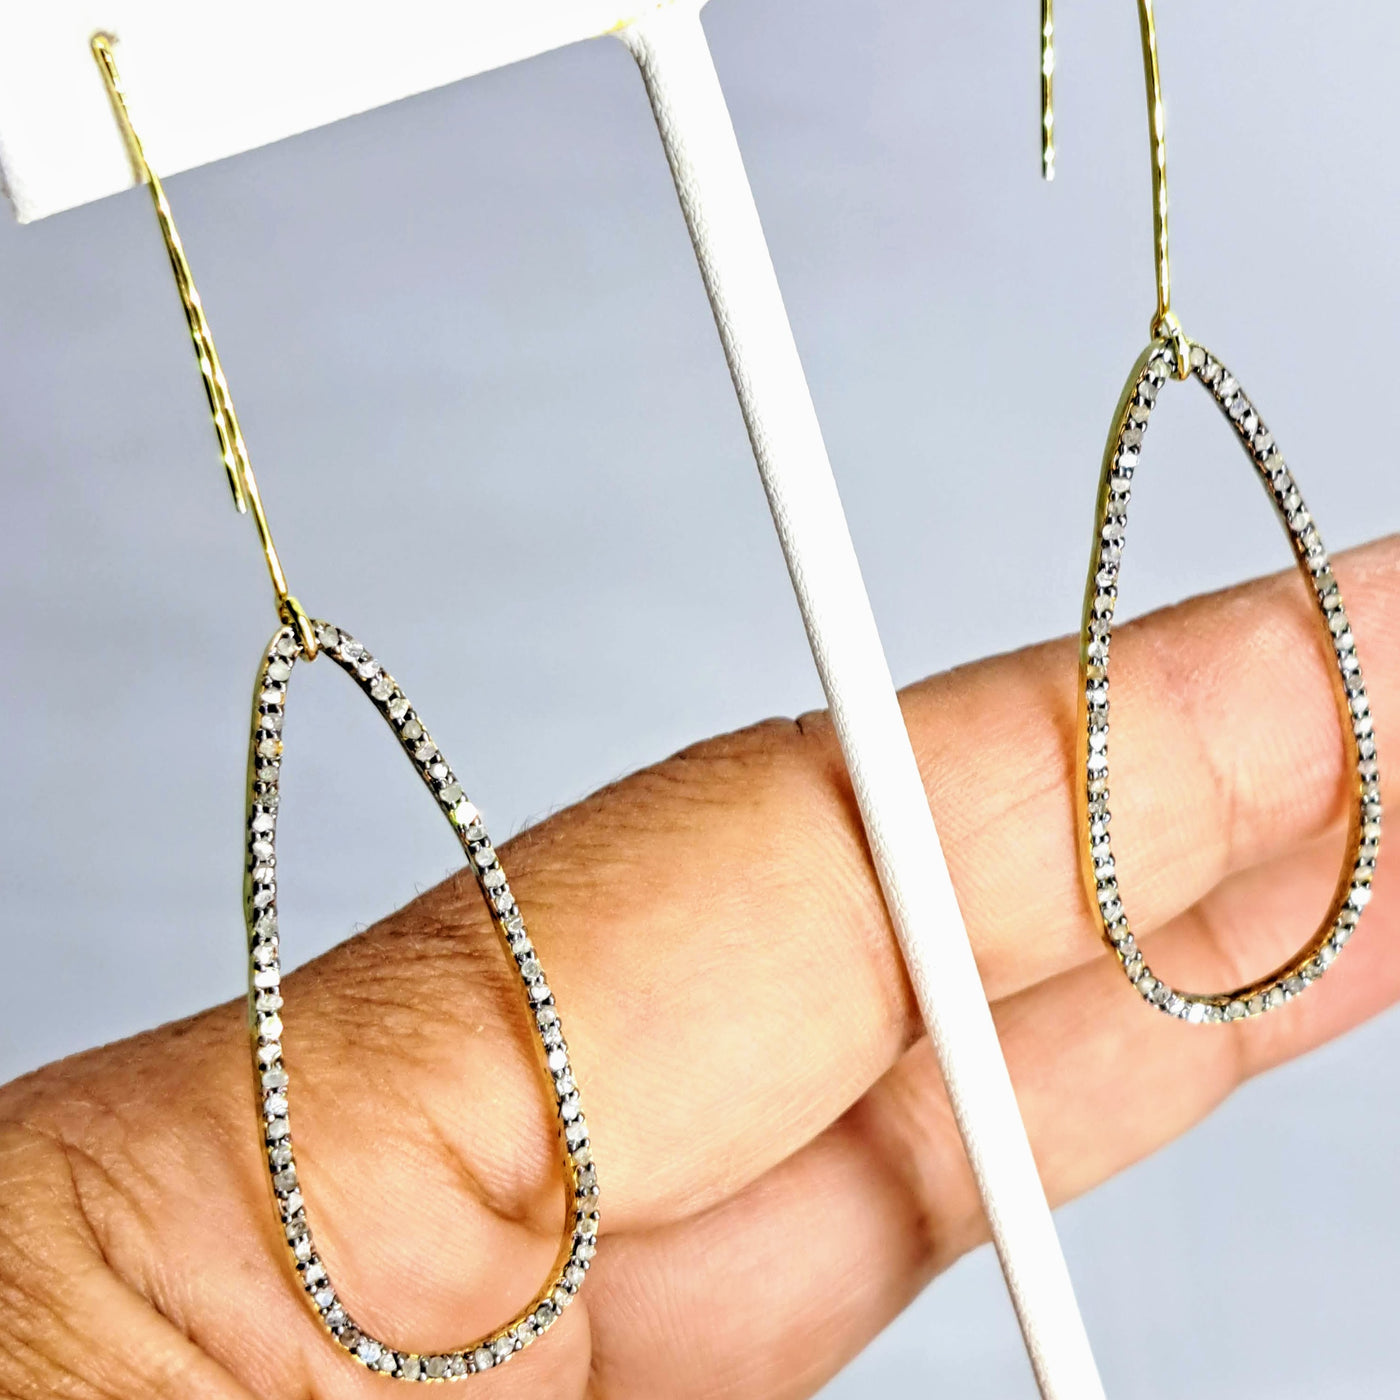 "In The Loop" Earrings By Barb - 2 STYLES! Diamond, Gold Sterling